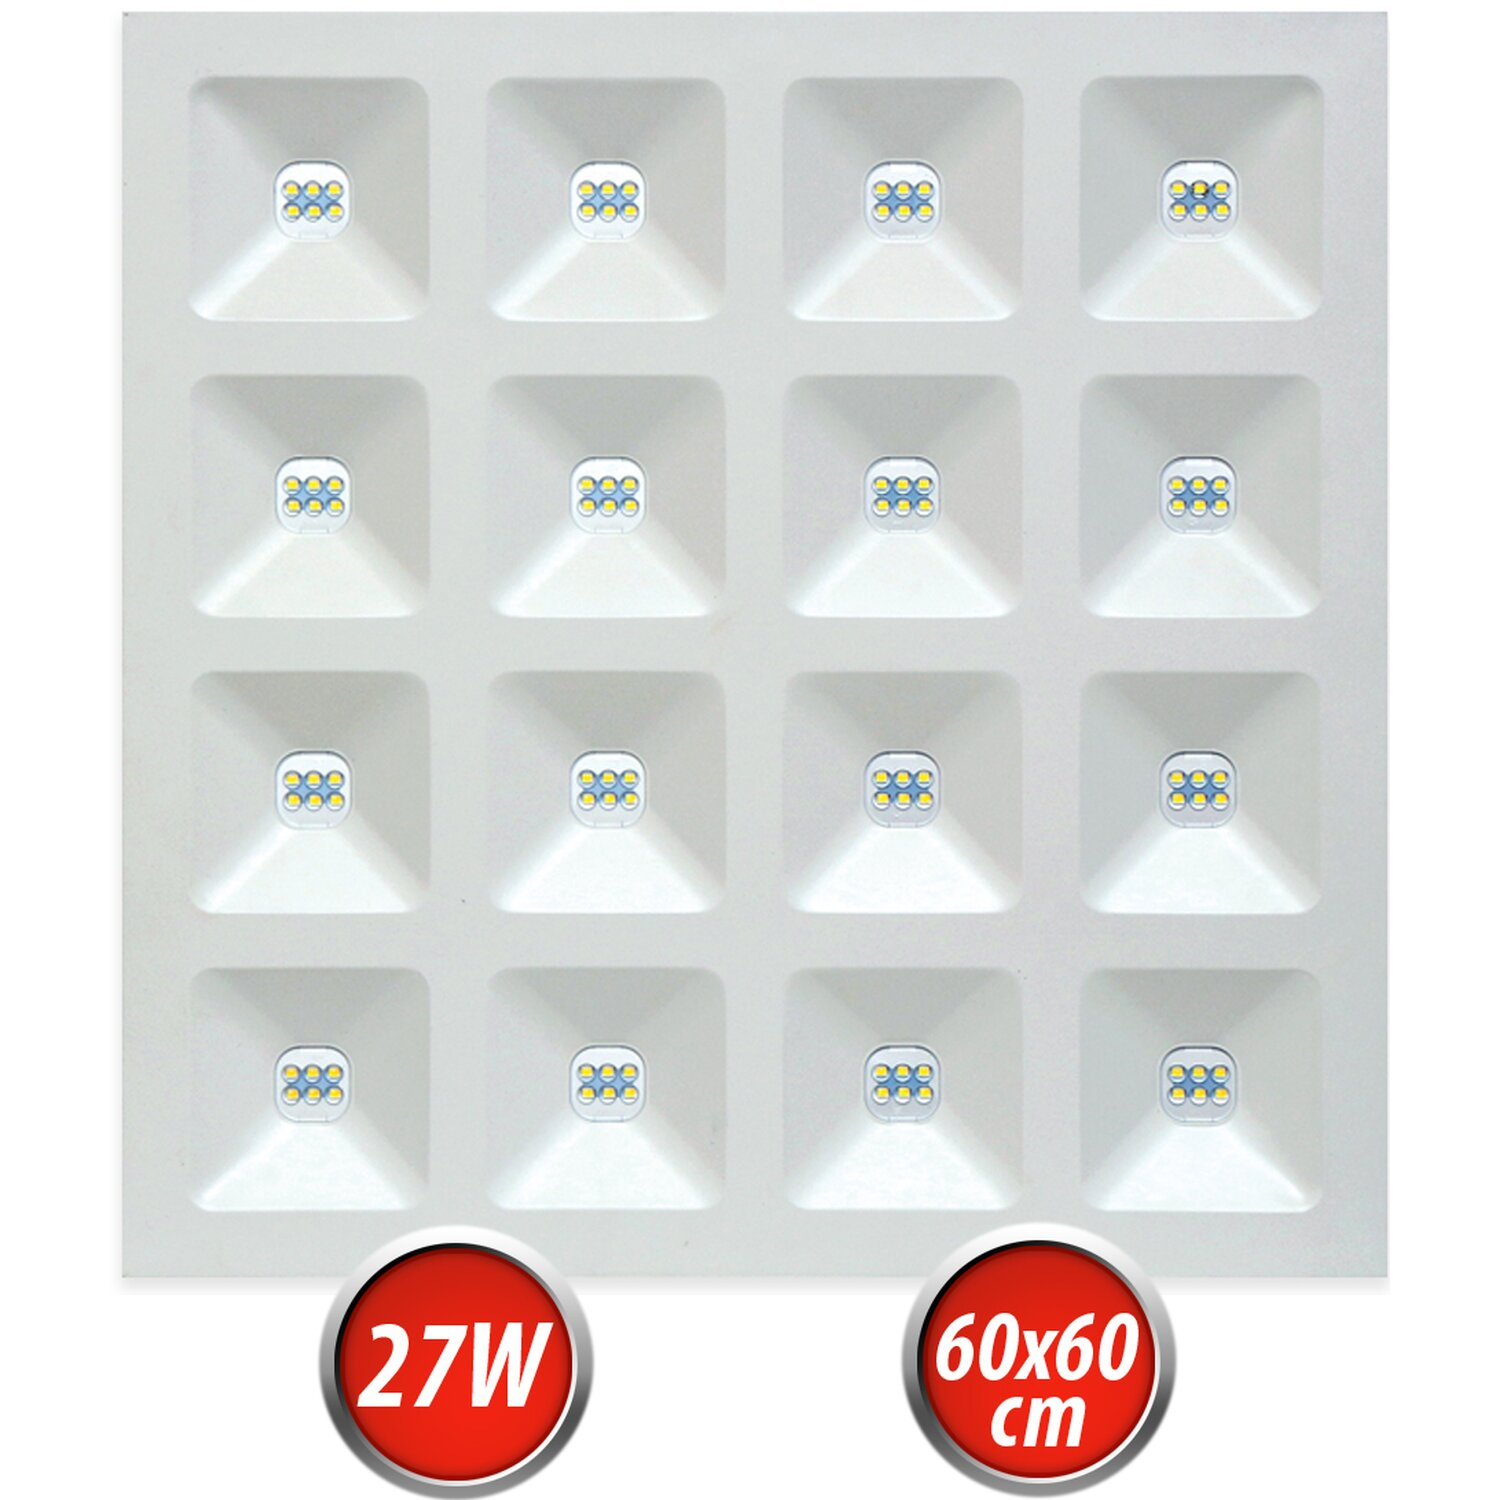 intergrieter 27W LINE LED LED Neutralweiß 3240lm 60x60cm Panel Trafo